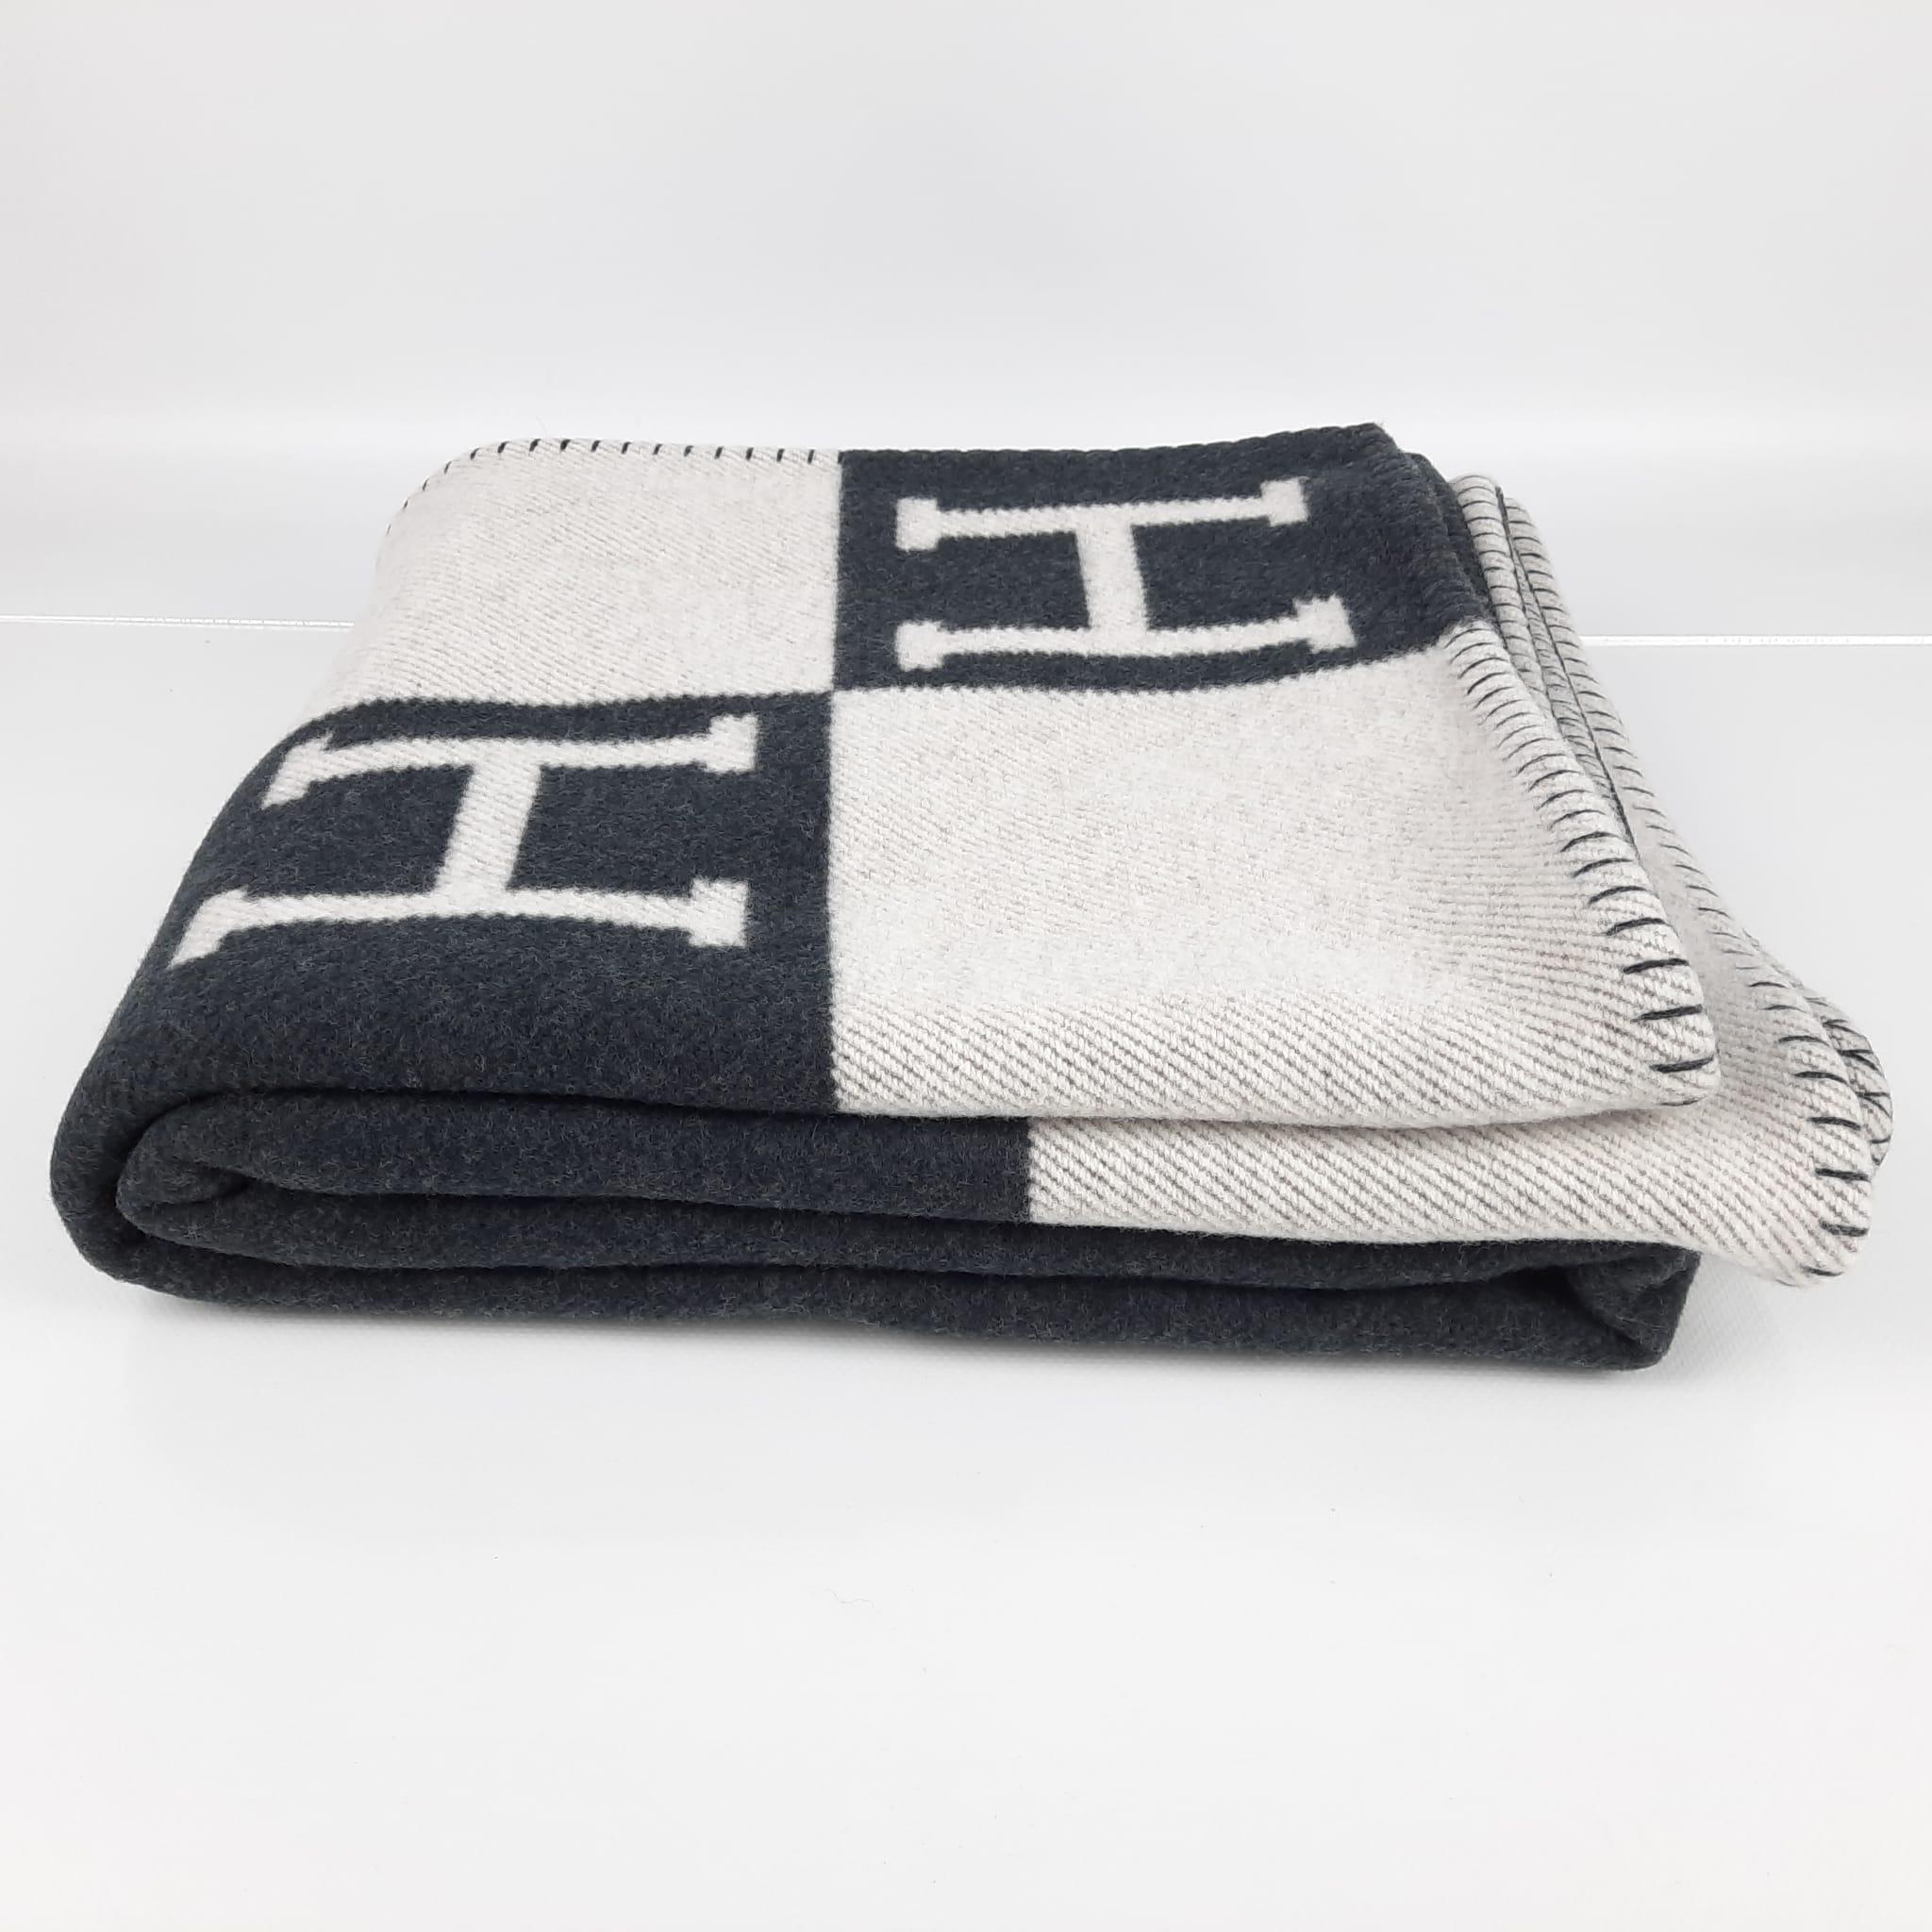 Throw blanket in Merinos wool and cashmere (90% Merinos wool, 10% cashmere)
